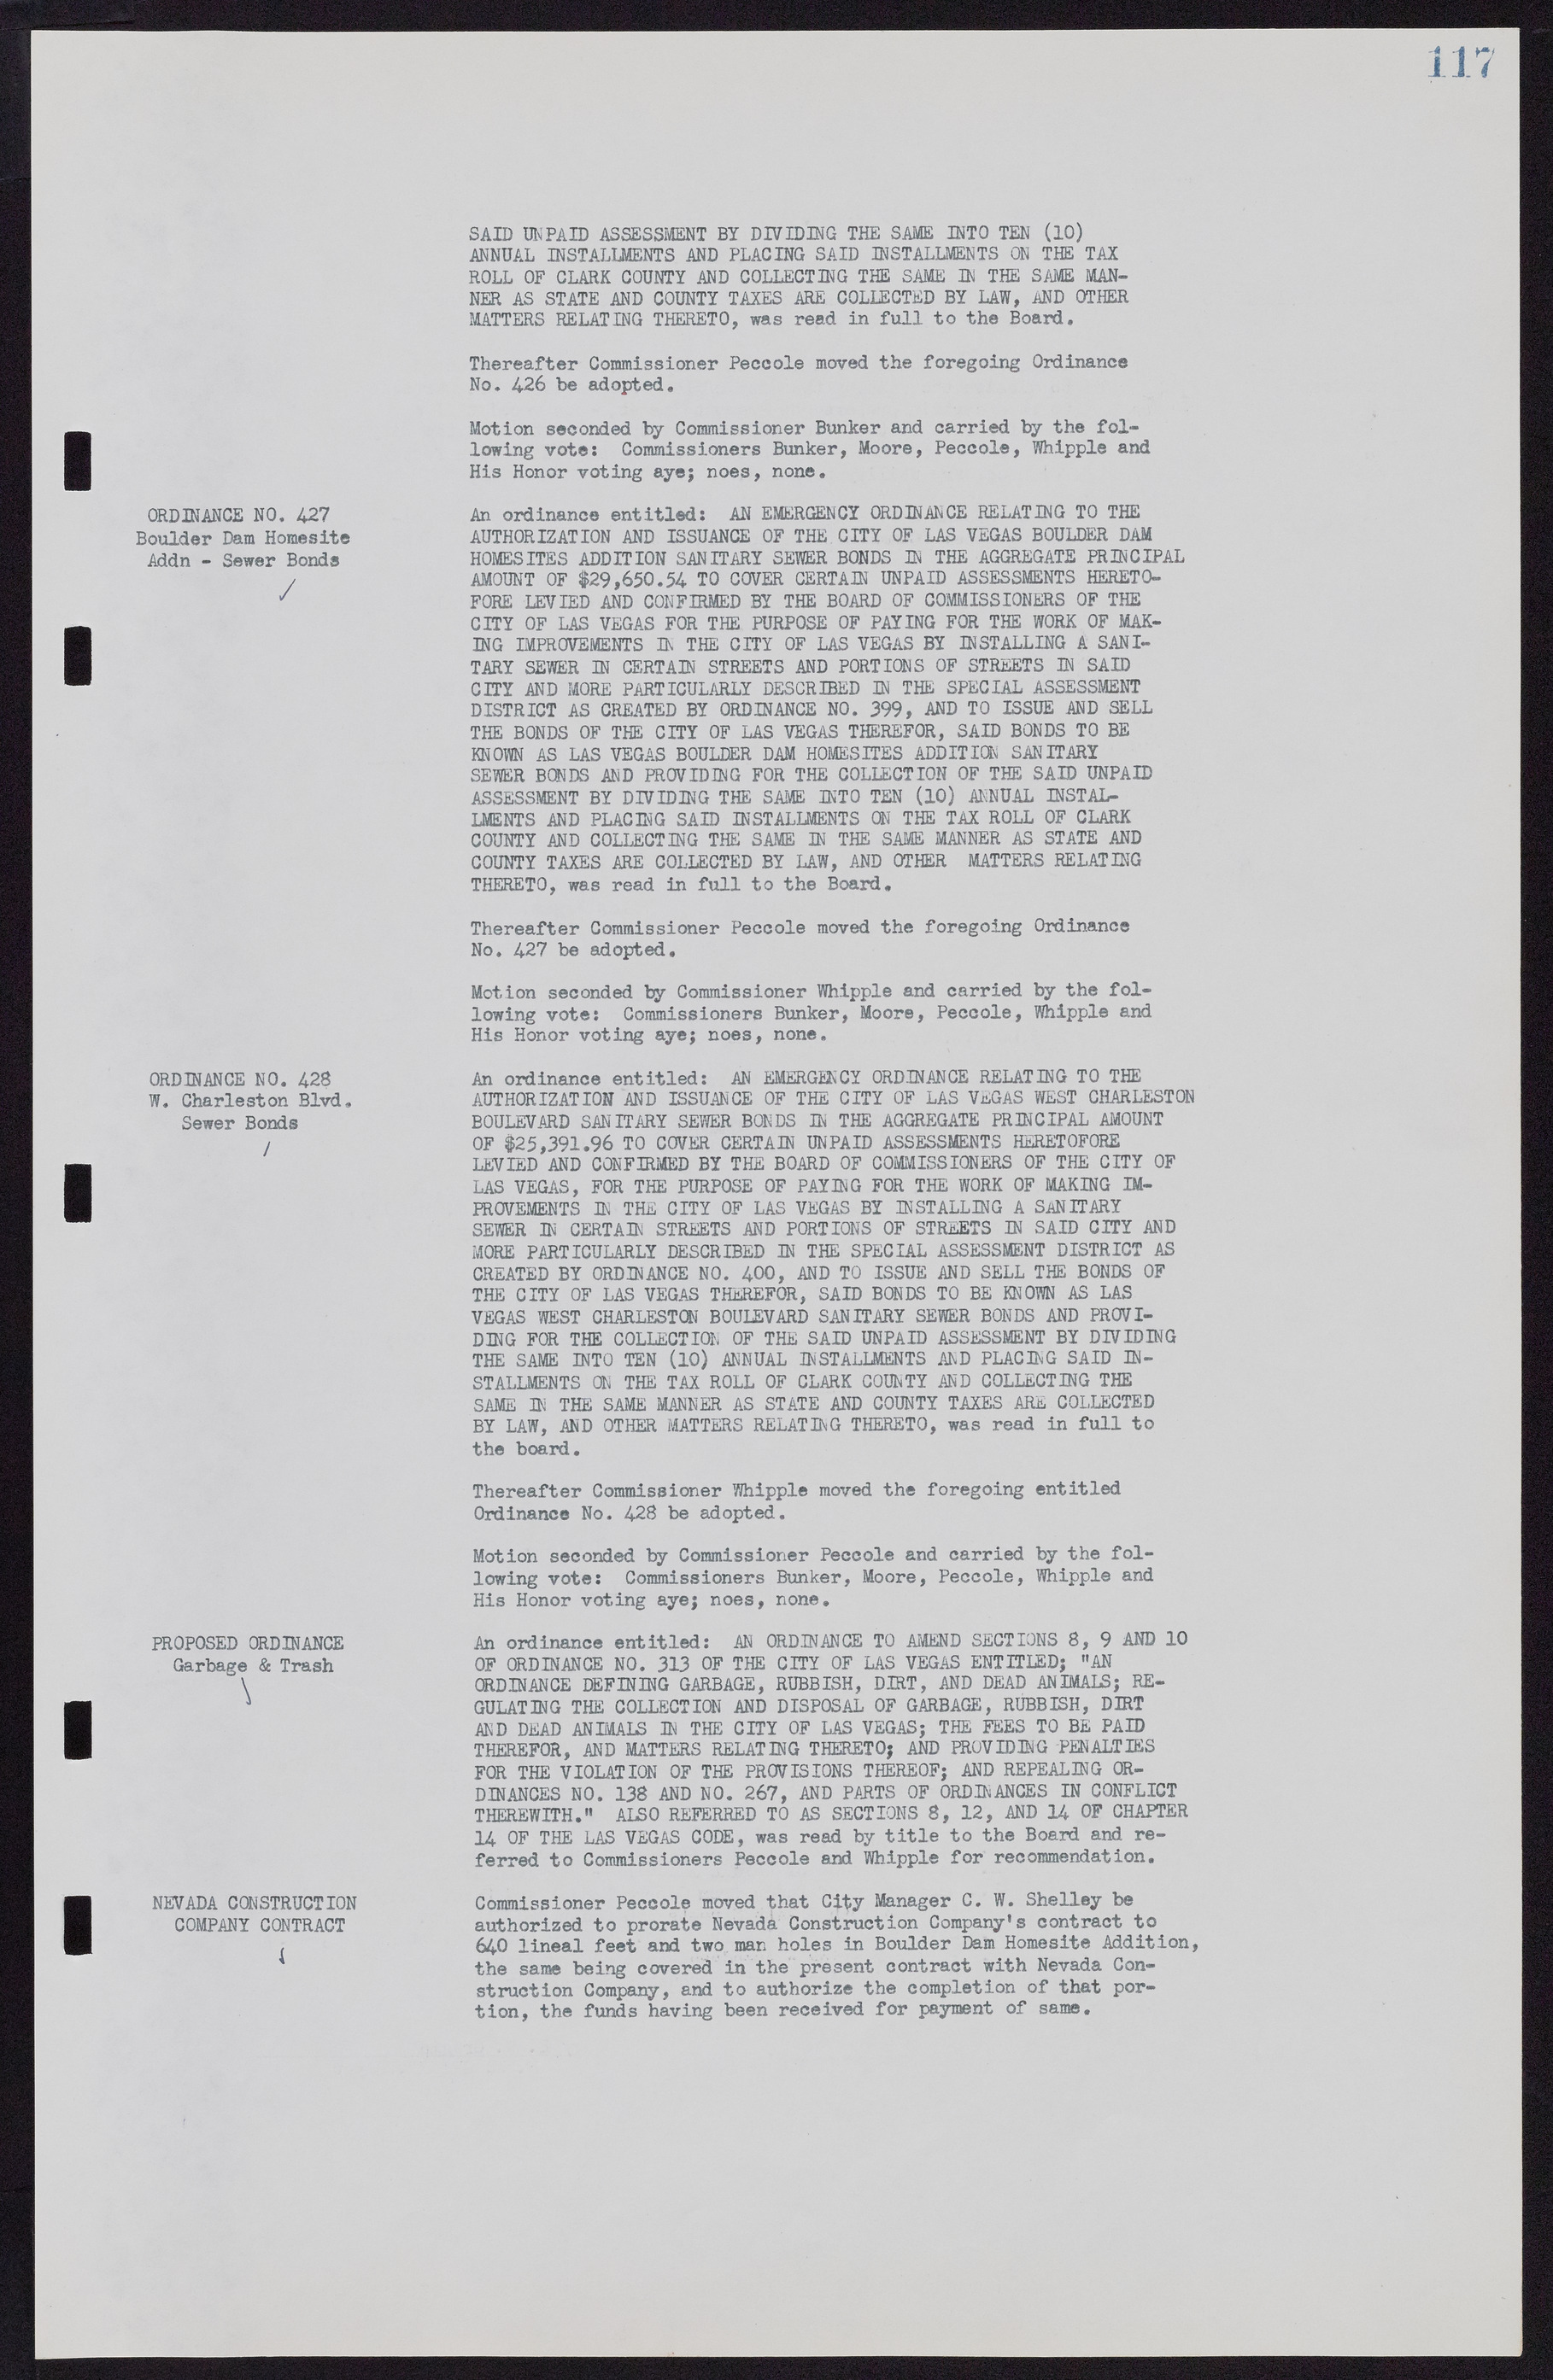 Las Vegas City Commission Minutes, November 7, 1949 to May 21, 1952, lvc000007-125